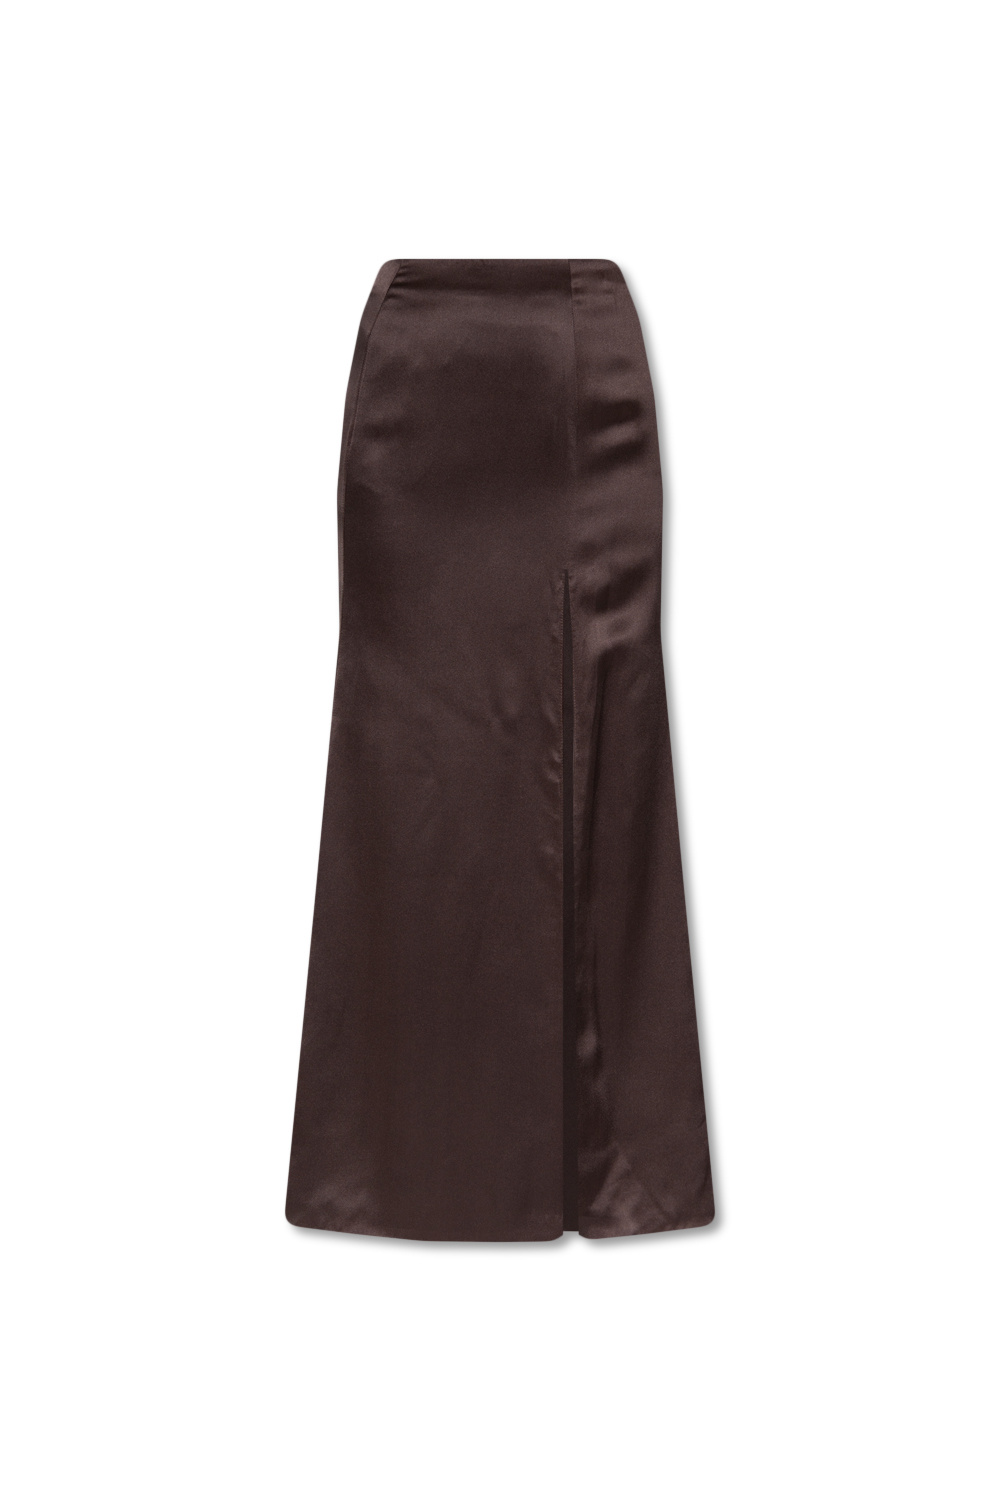 Bite Studios Skirt with frontal slit